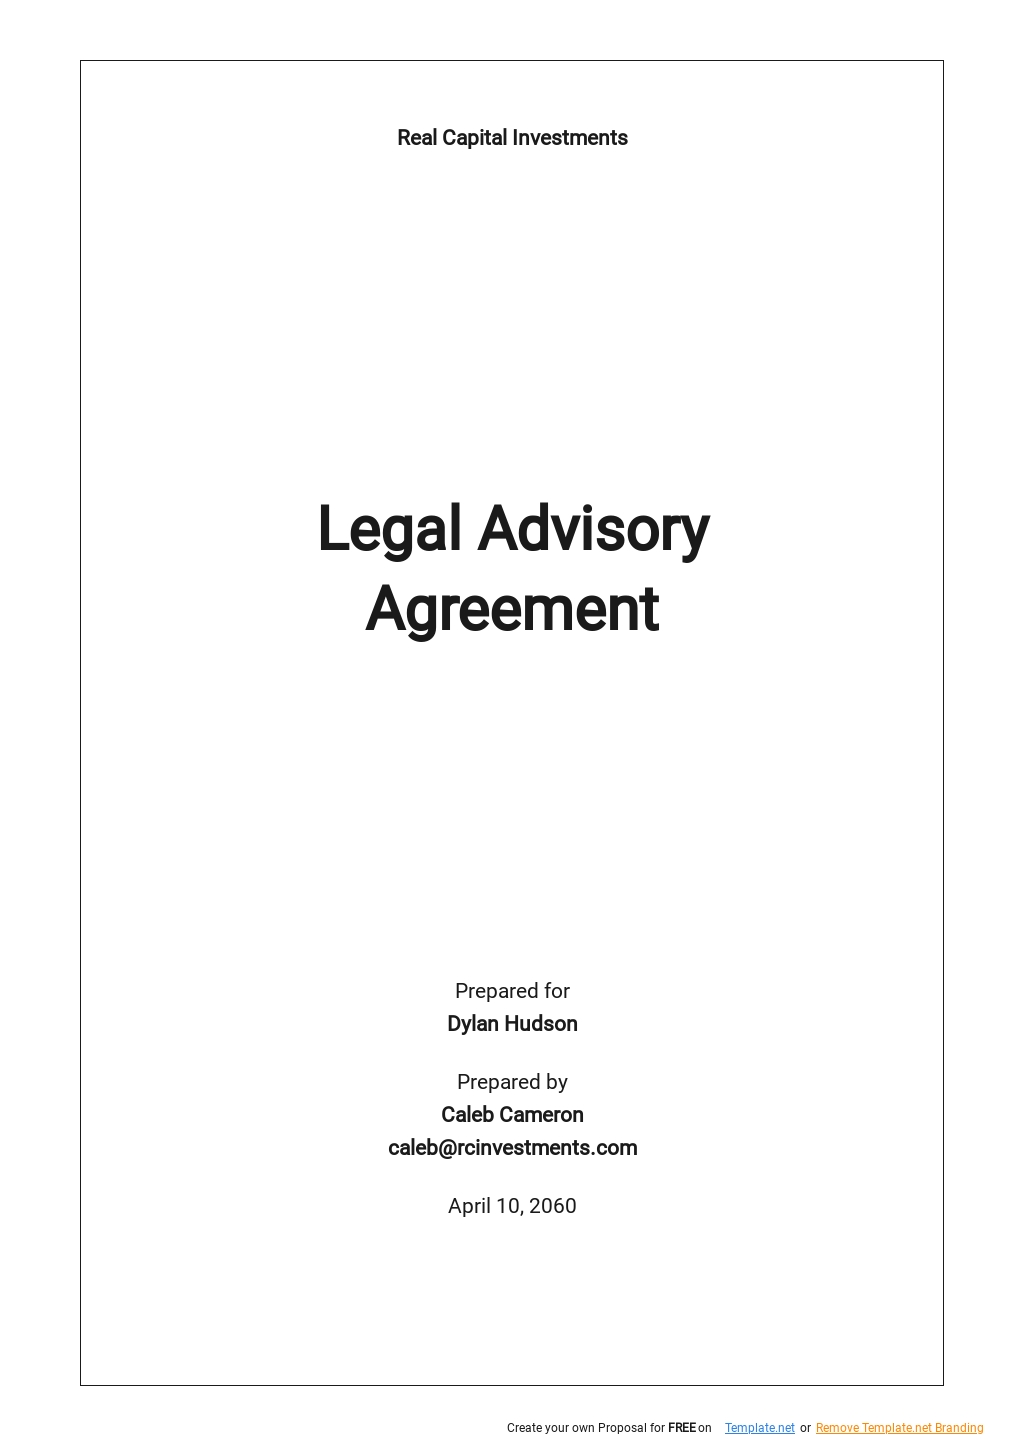 Legal Advisory Agreement Template .jpe